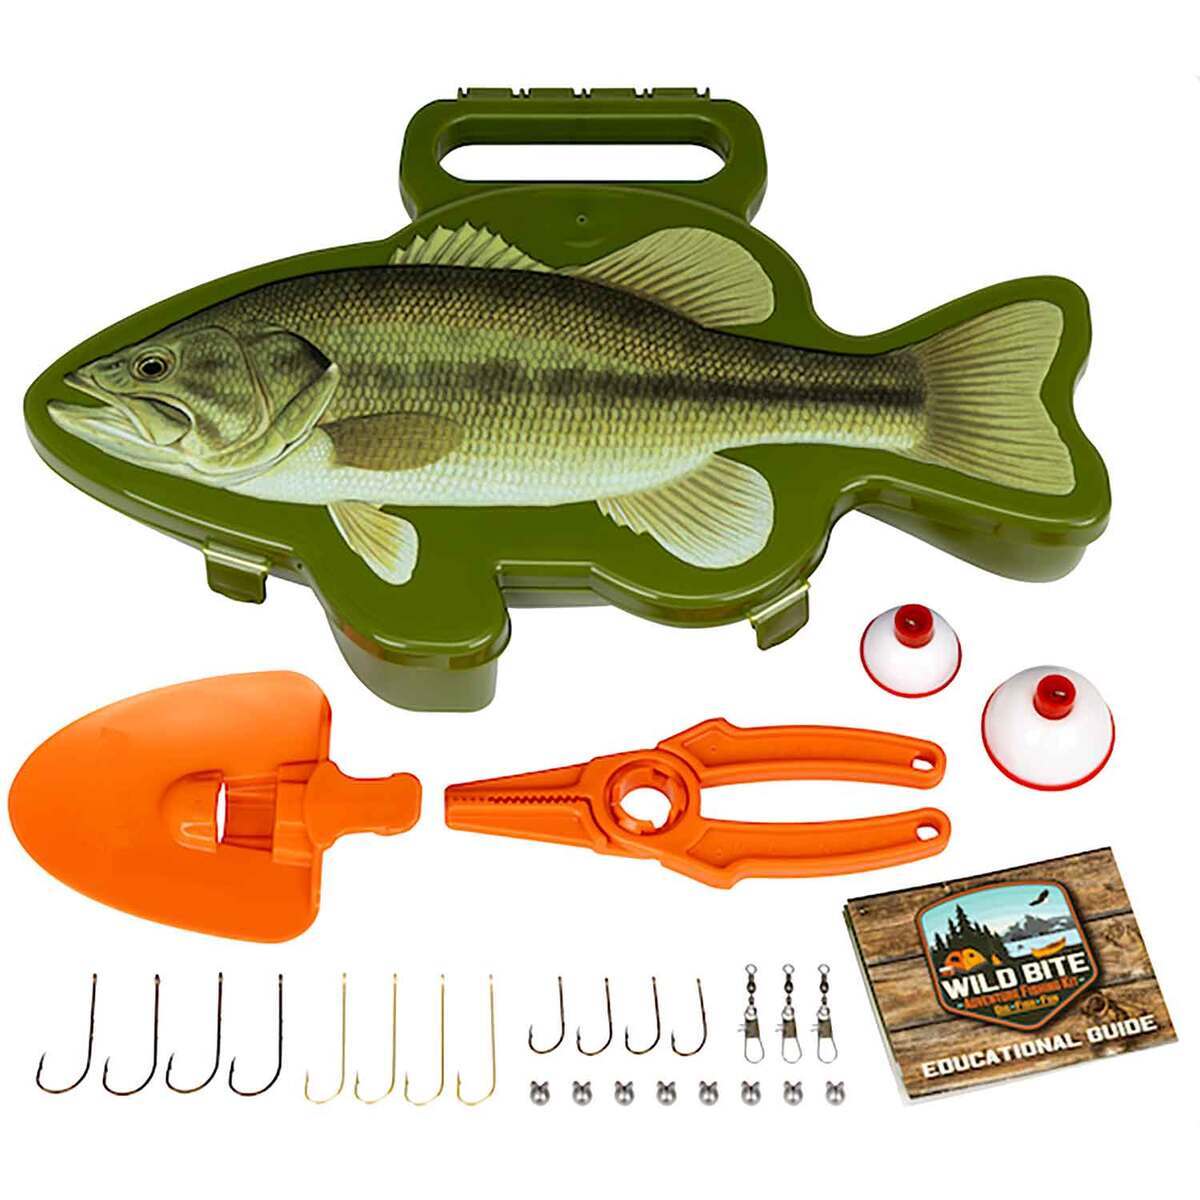 Flambeau Outdoors Wild Bite Fishing Tackle Box Kit